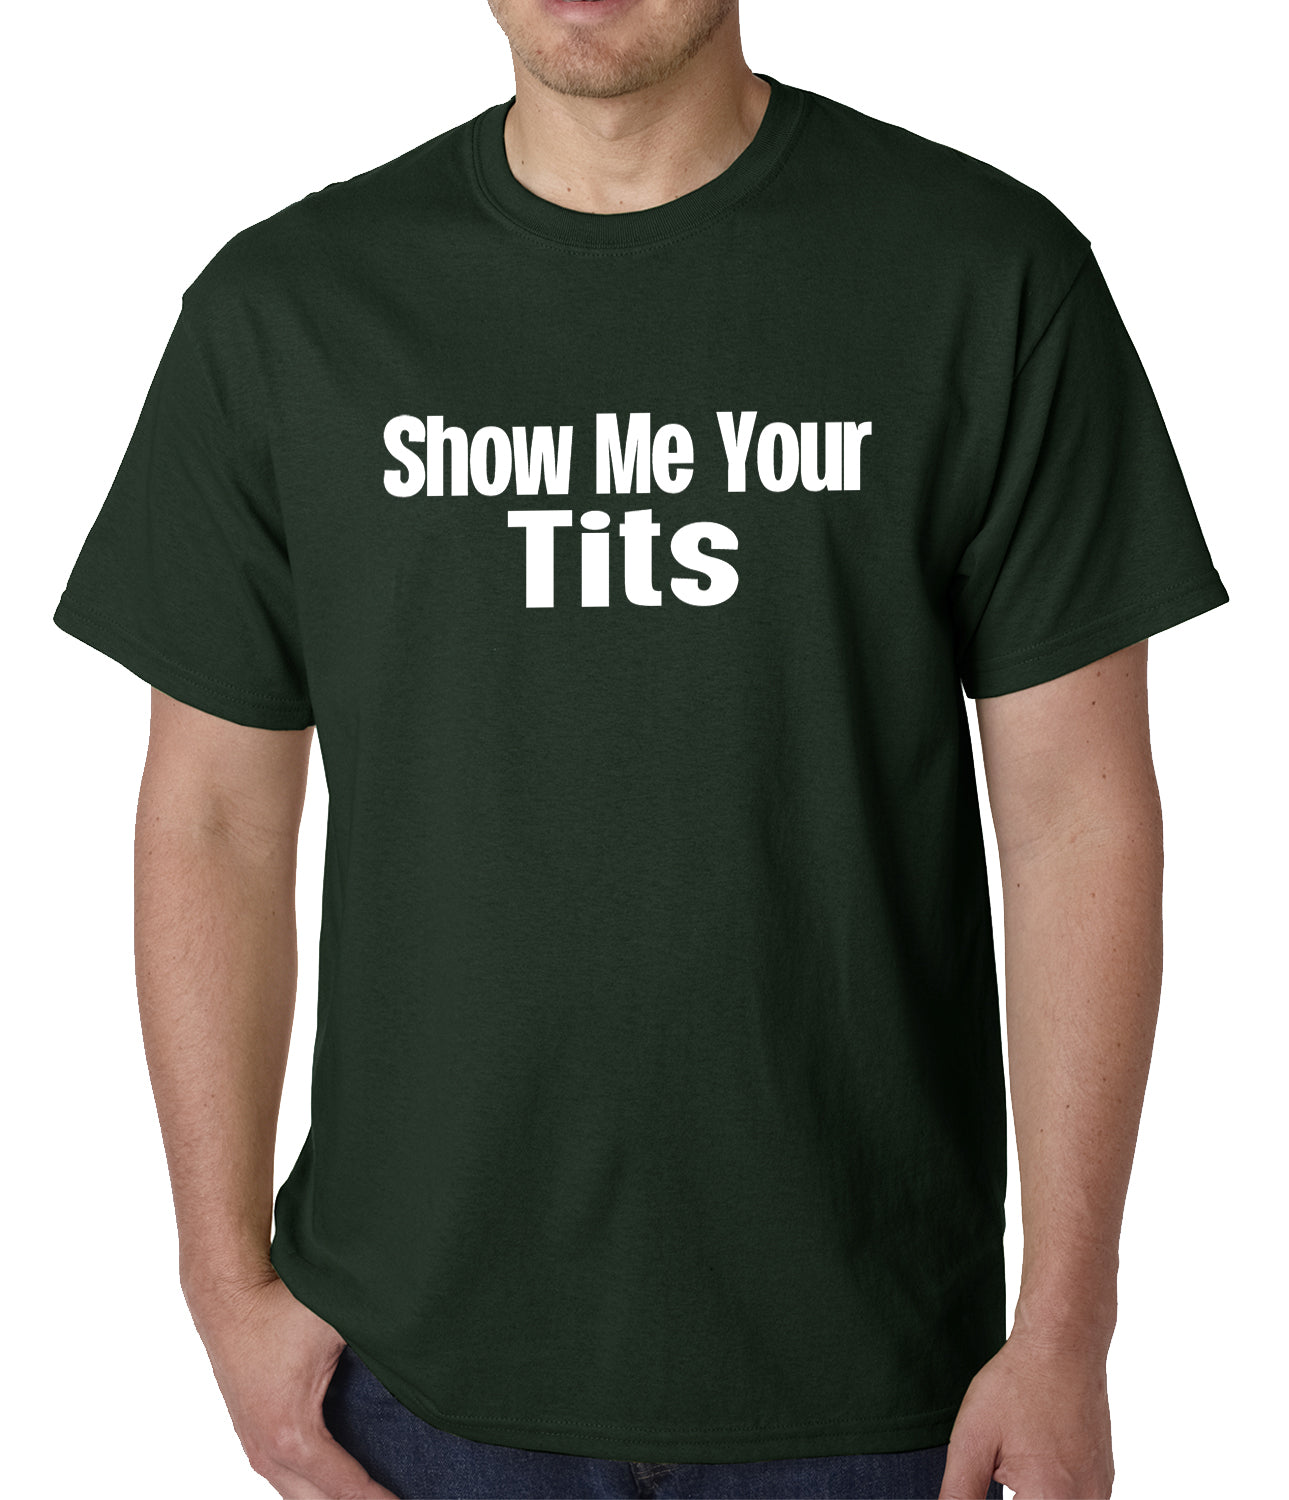 Show me your boobs funny t shirt tshirt tits